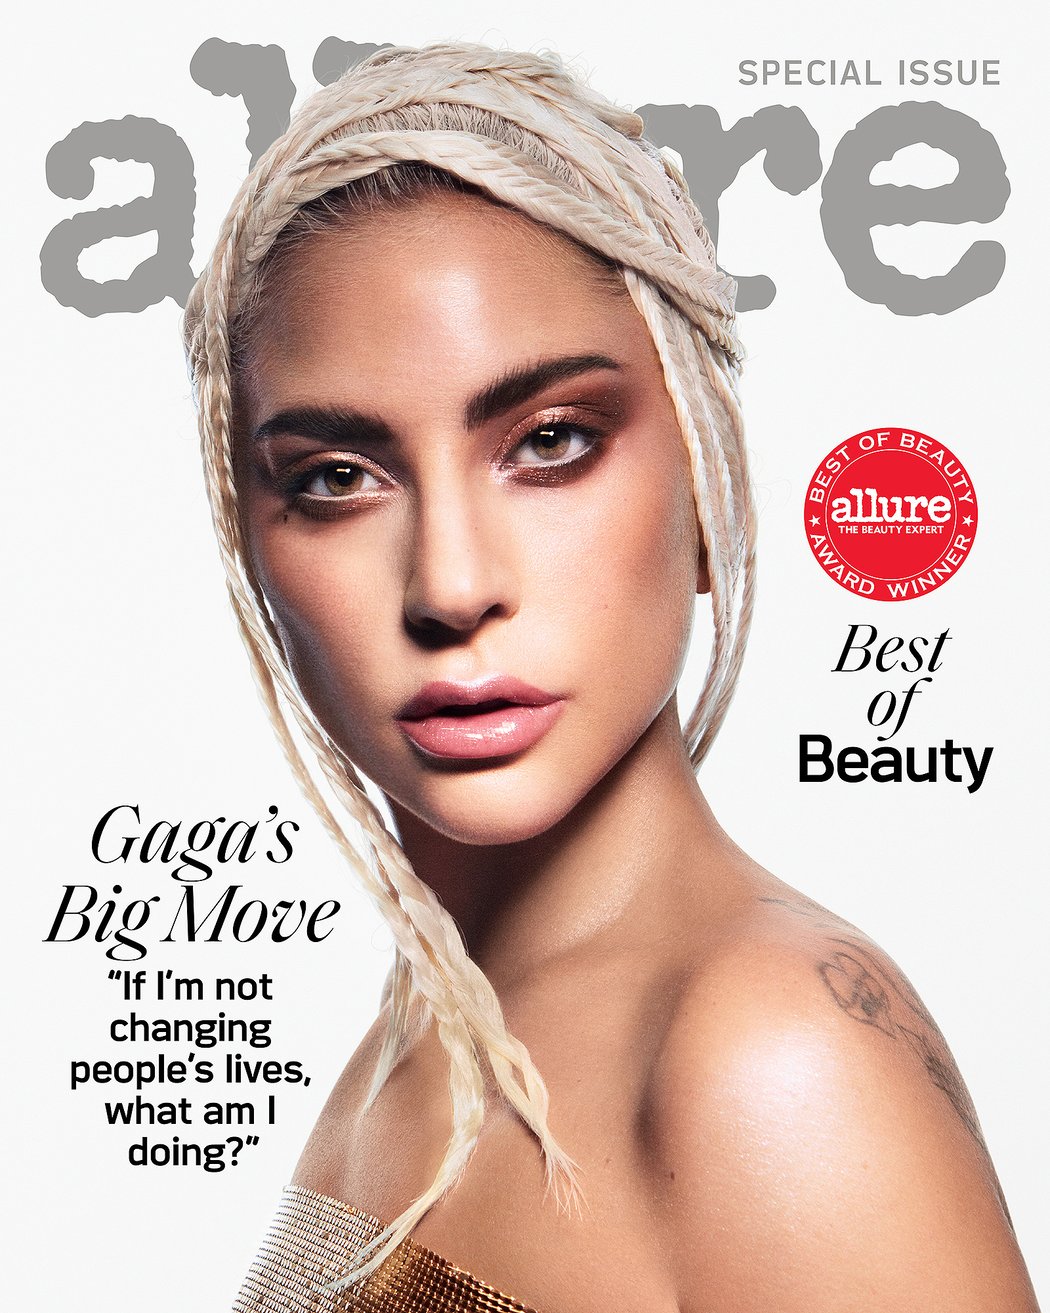 Lady Gaga Beberkan Bagaimana Riasan Mengubah Dirinya: Make-up Memberi Saya Sayap Untuk Terbang